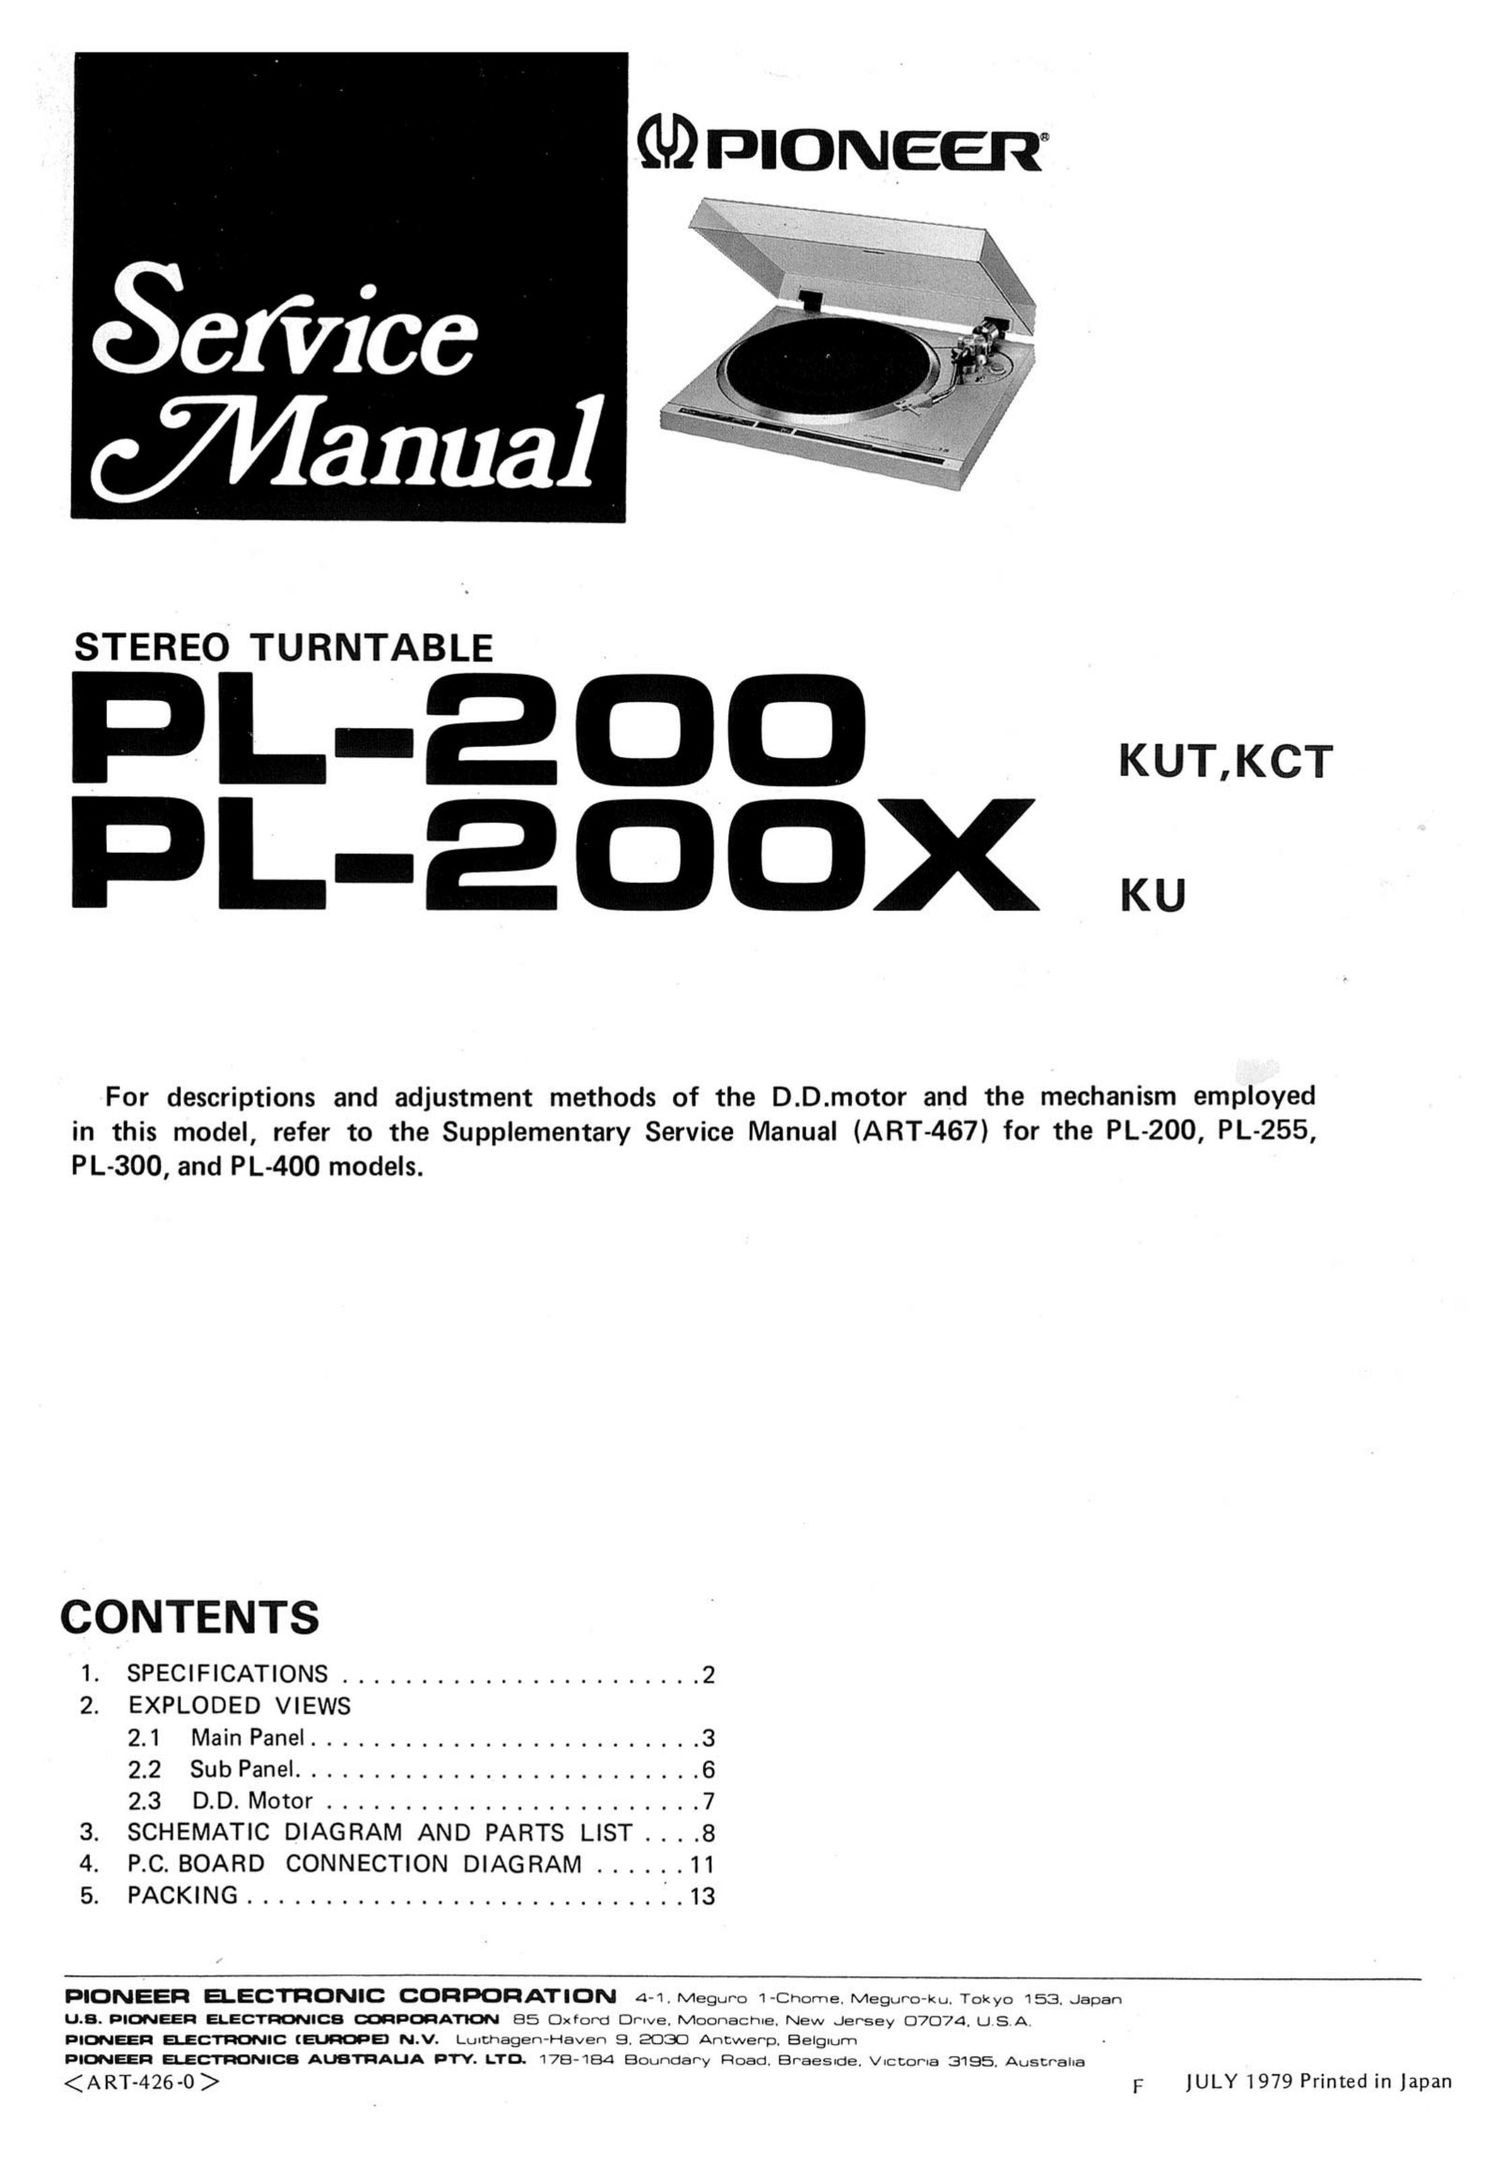 Pioneer PL 200 Service Manual